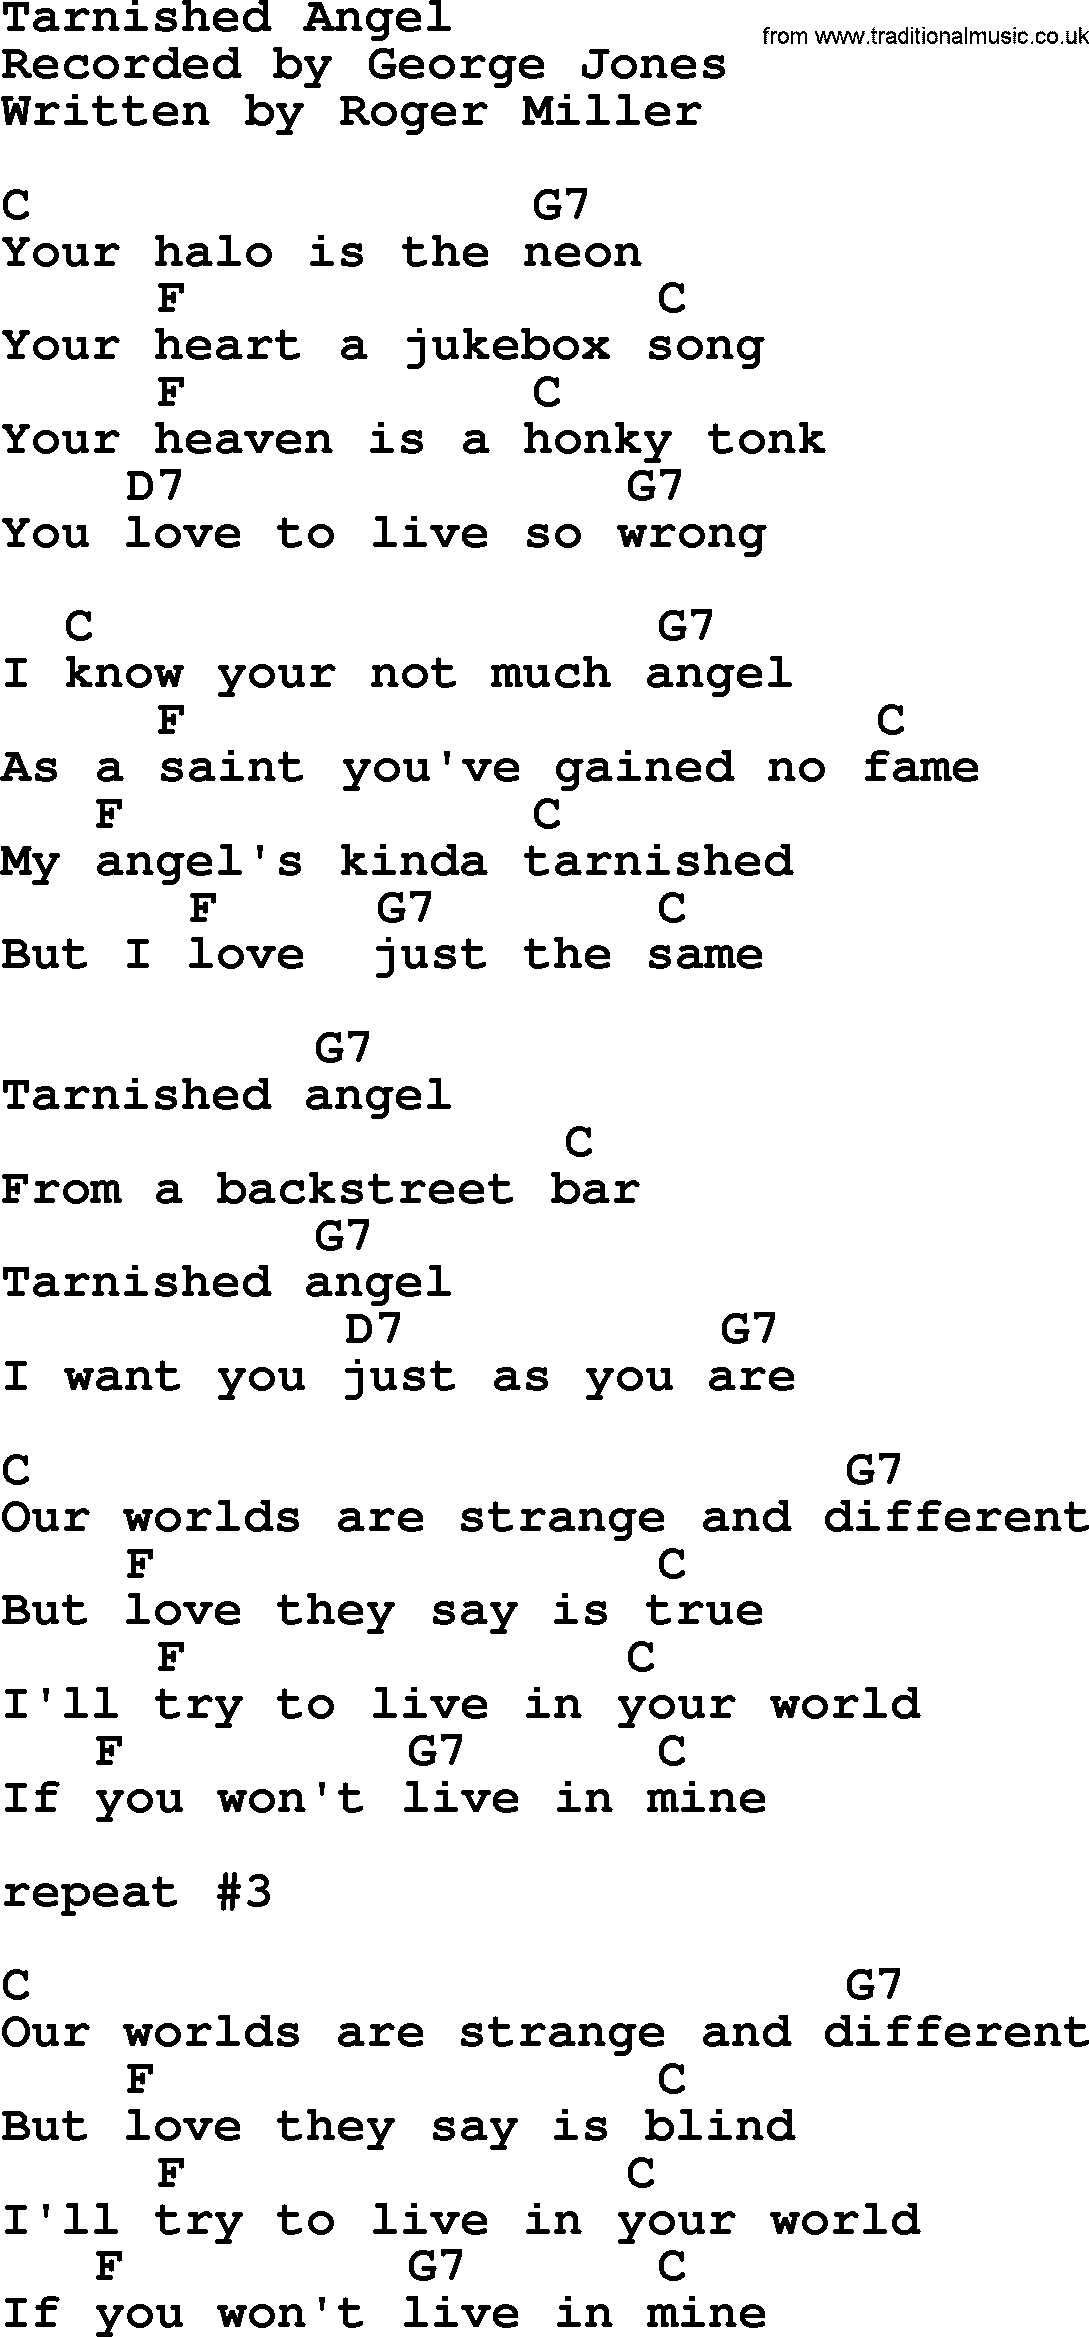 George Jones song: Tarnished Angel, lyrics and chords